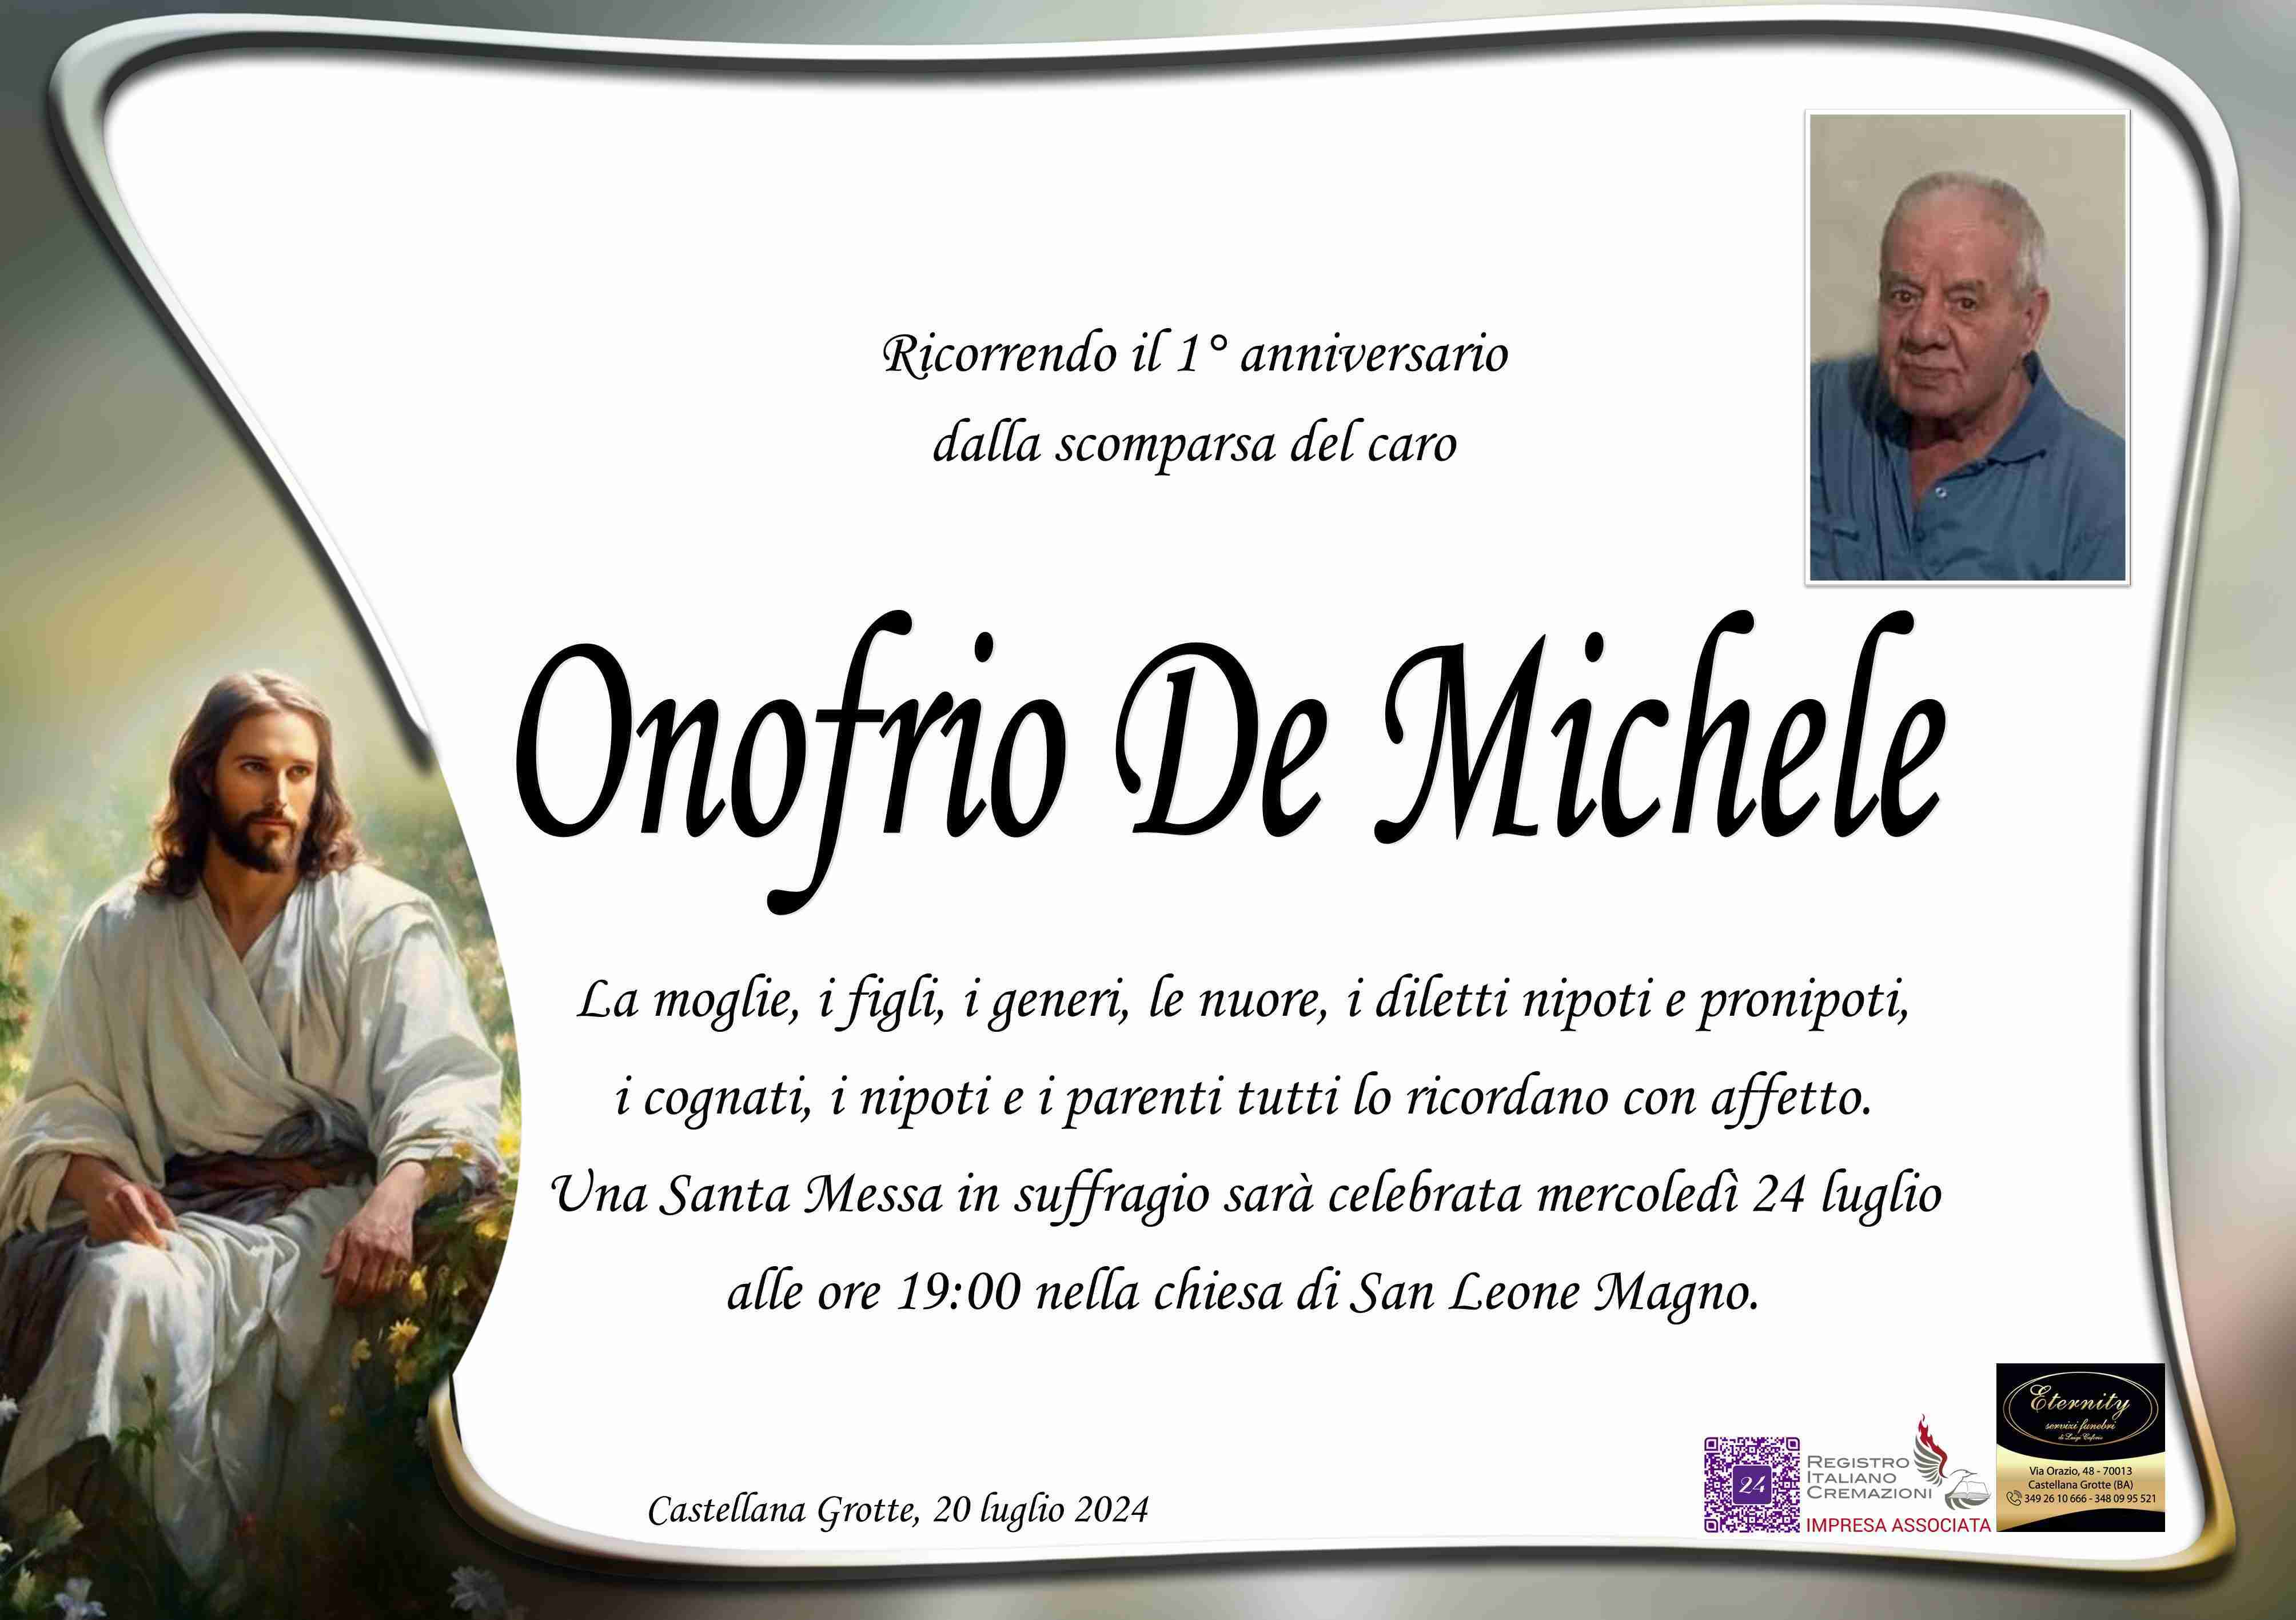 Onofrio De Michele